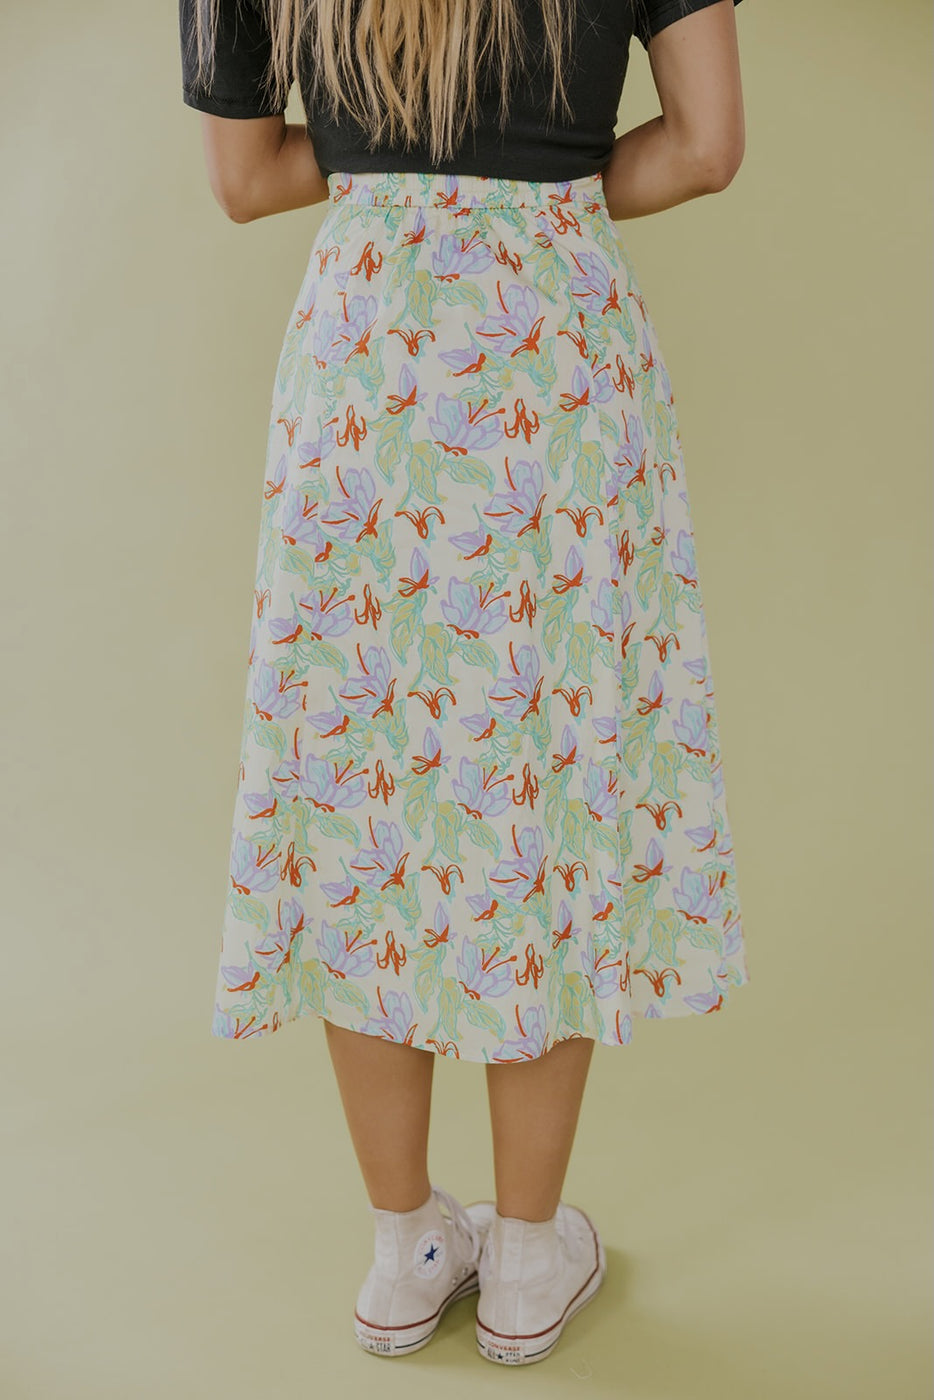 The Springtime Serenade Skirt